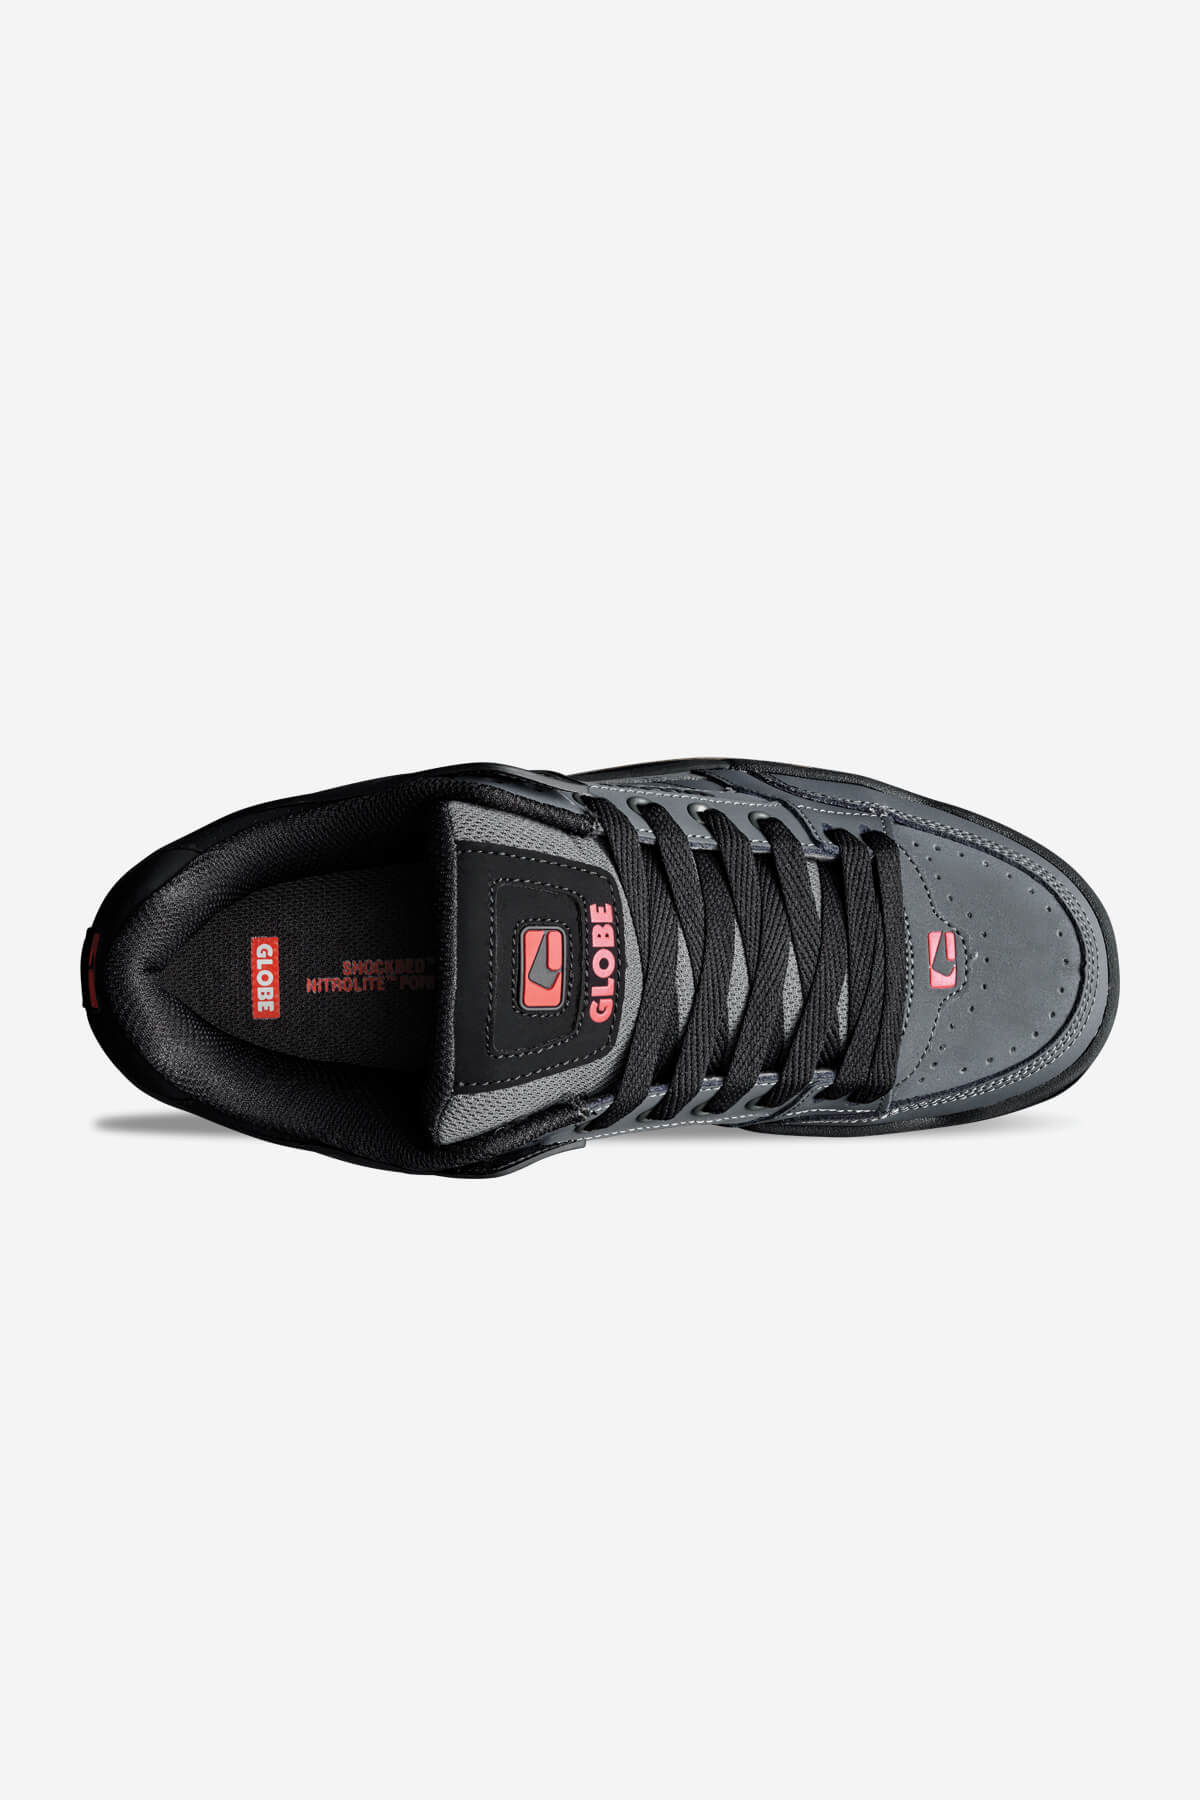 Globe Chaussures basses Tilt skateboard  chaussures en Black/Grey/Red